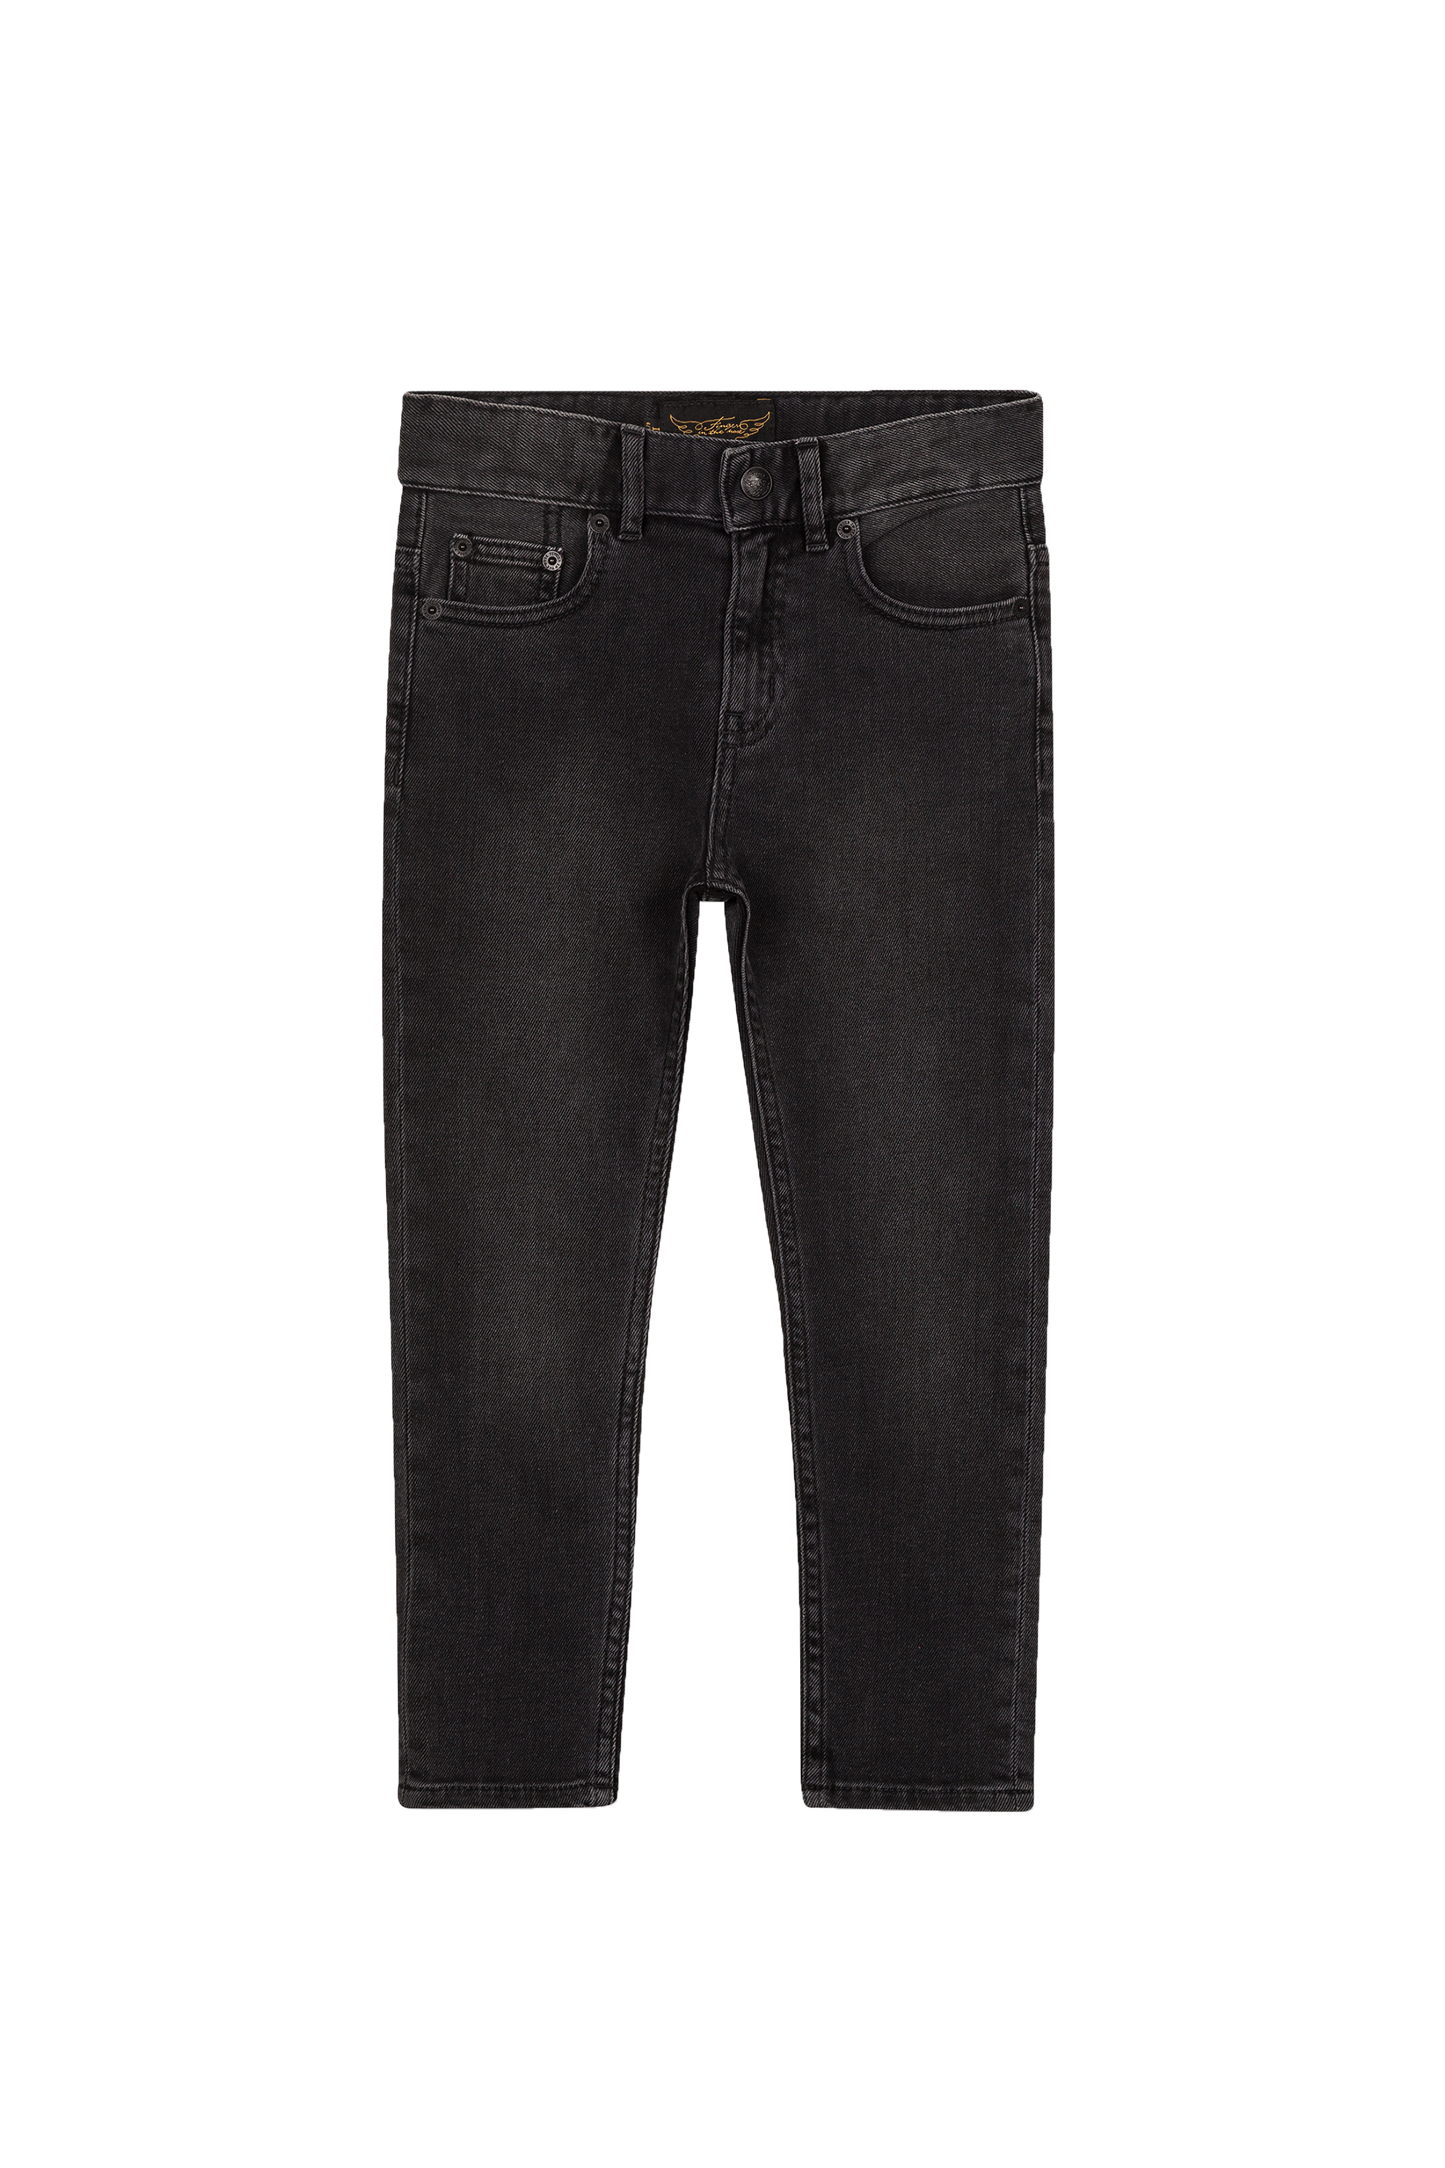 EWAN Khol Denim - 5-Pocket Comfort Fit Jeans